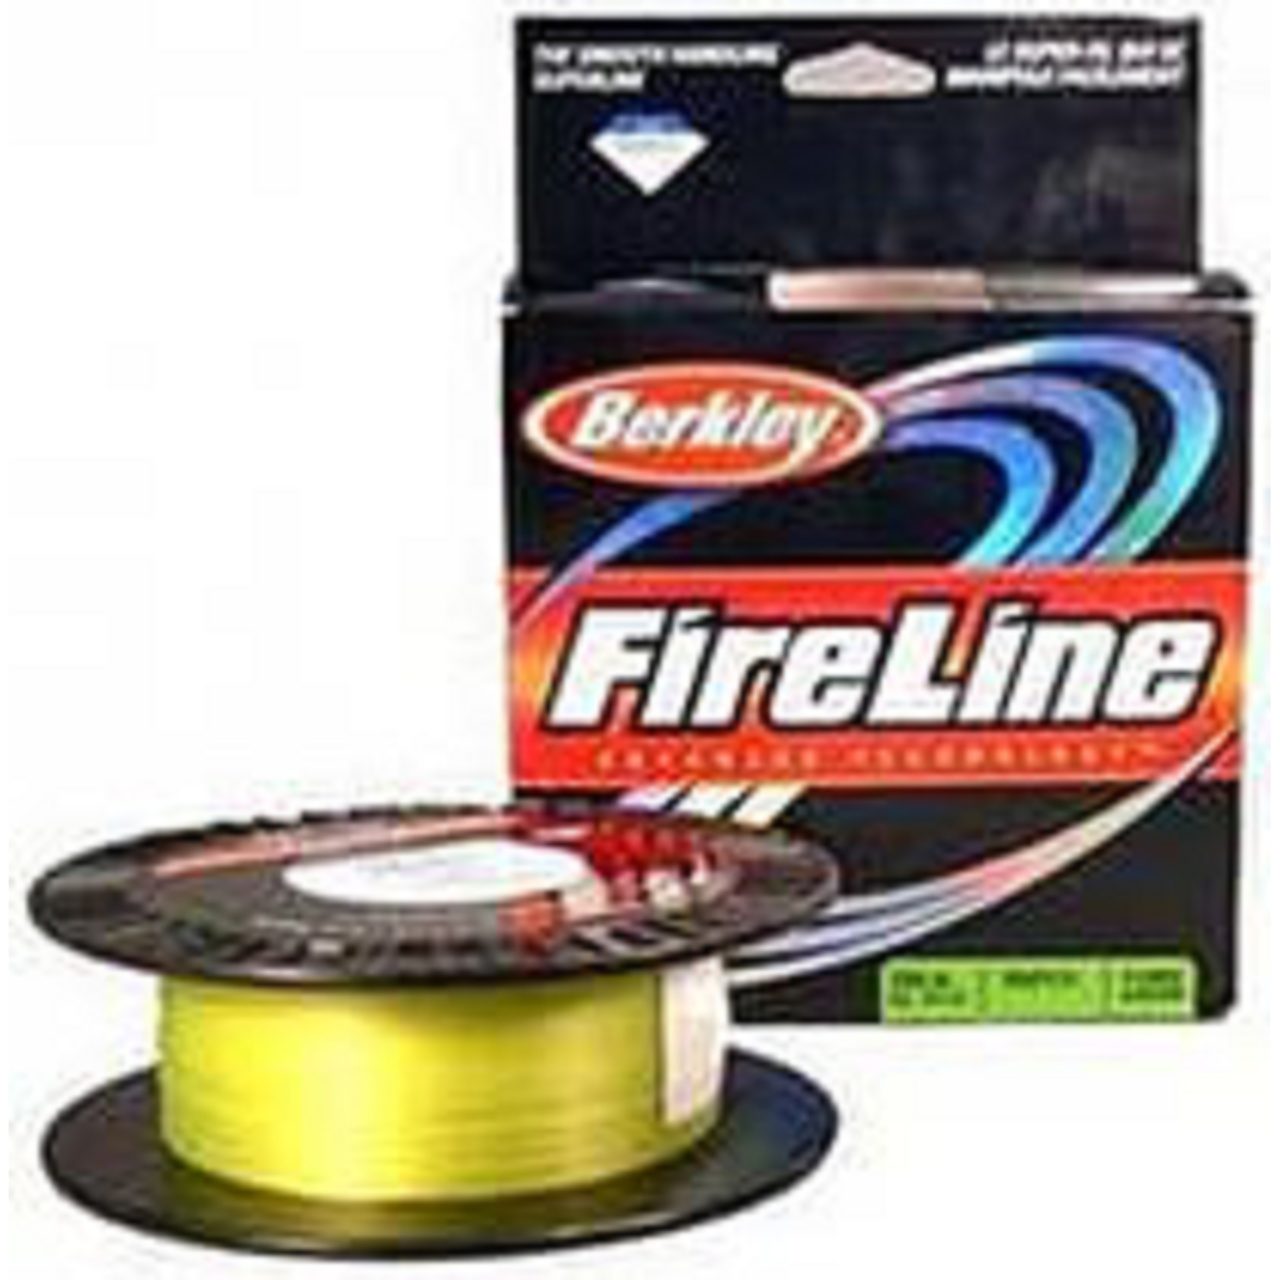 Berkley Fireline Flame Green